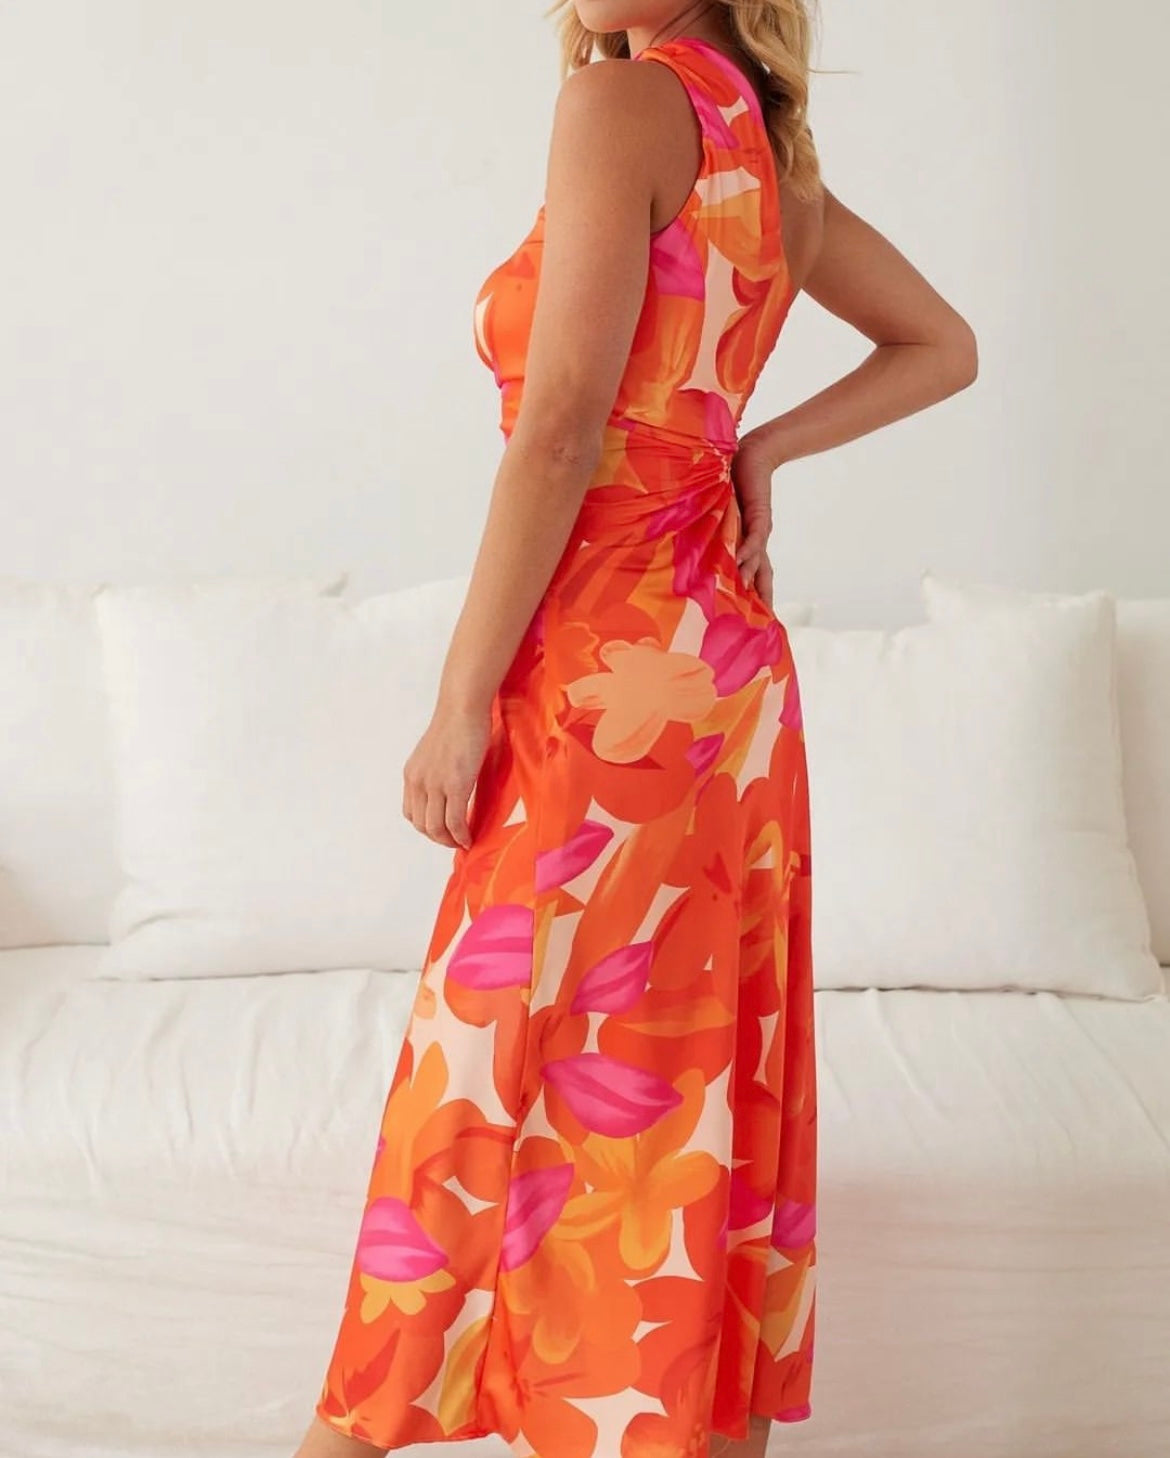 Sweetpot Orange Floral Dress